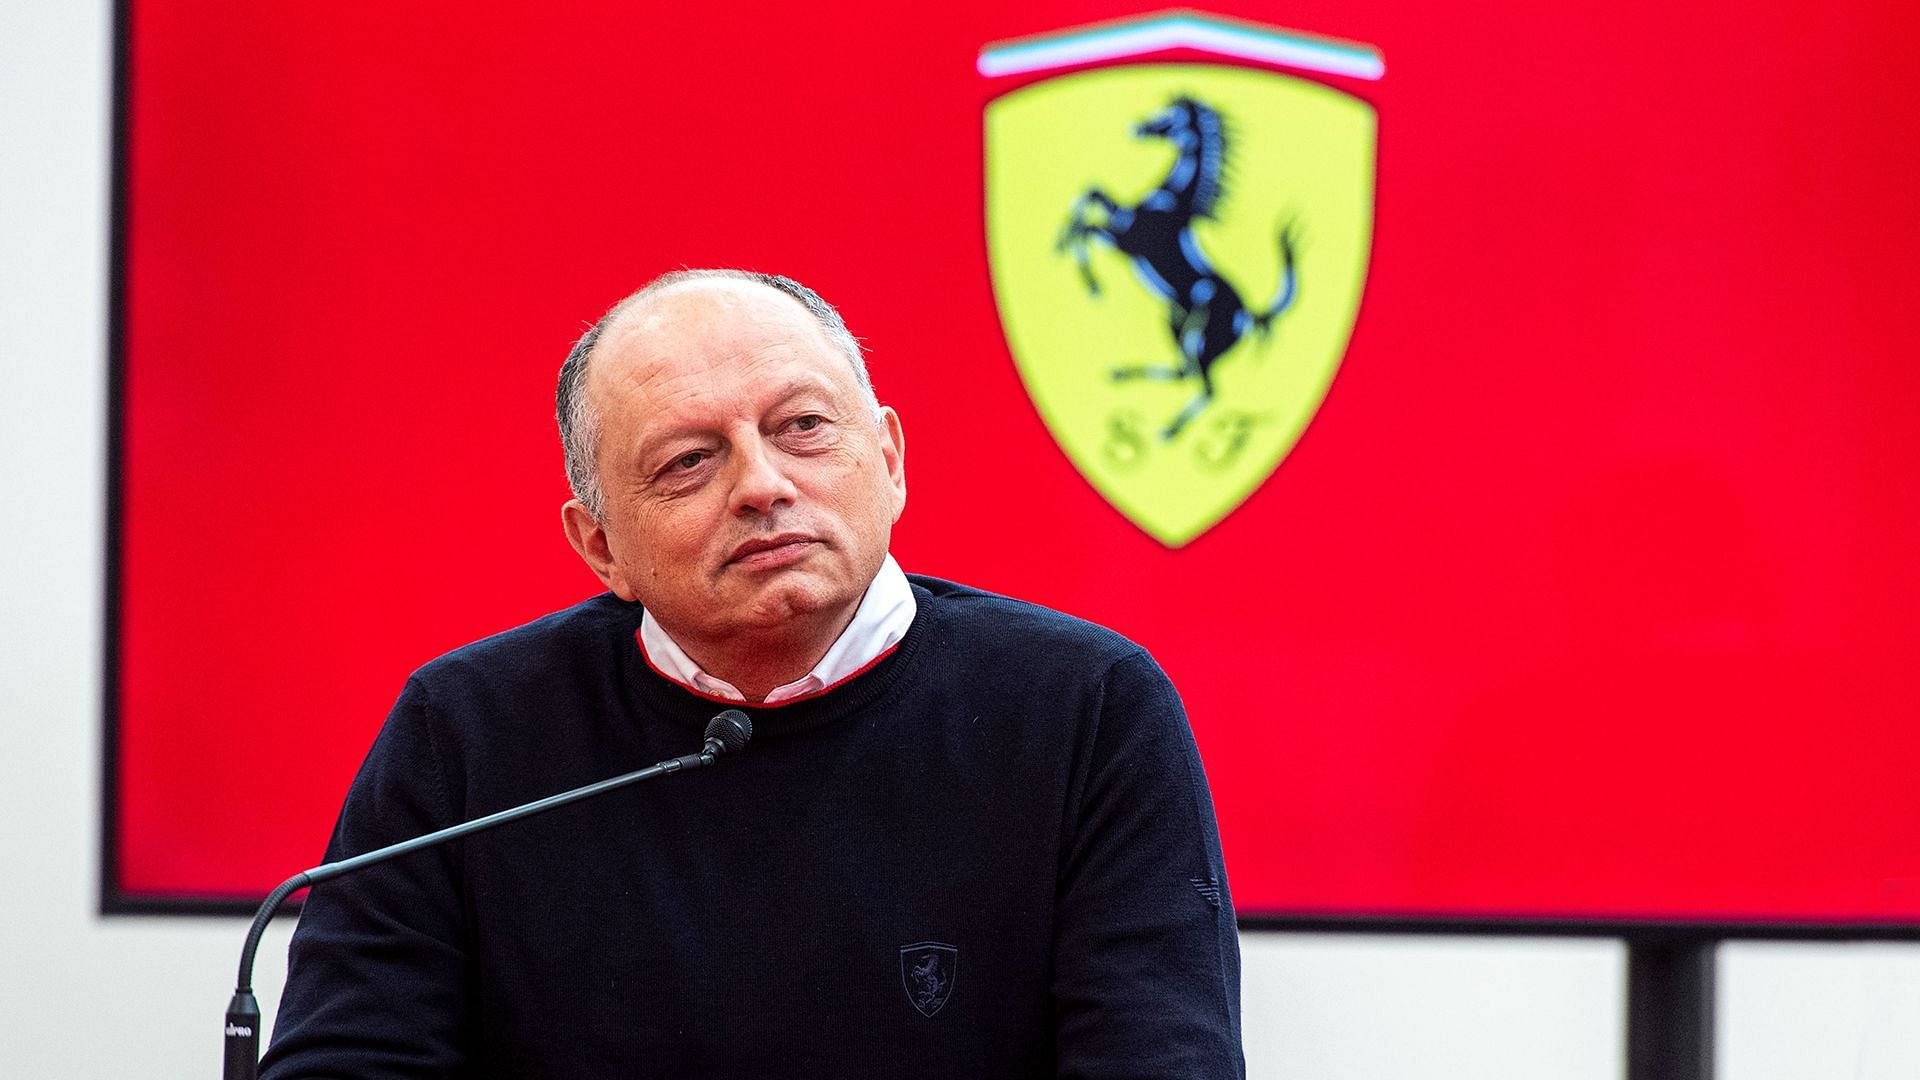 Fred Vasseur will be leading Ferrari this season